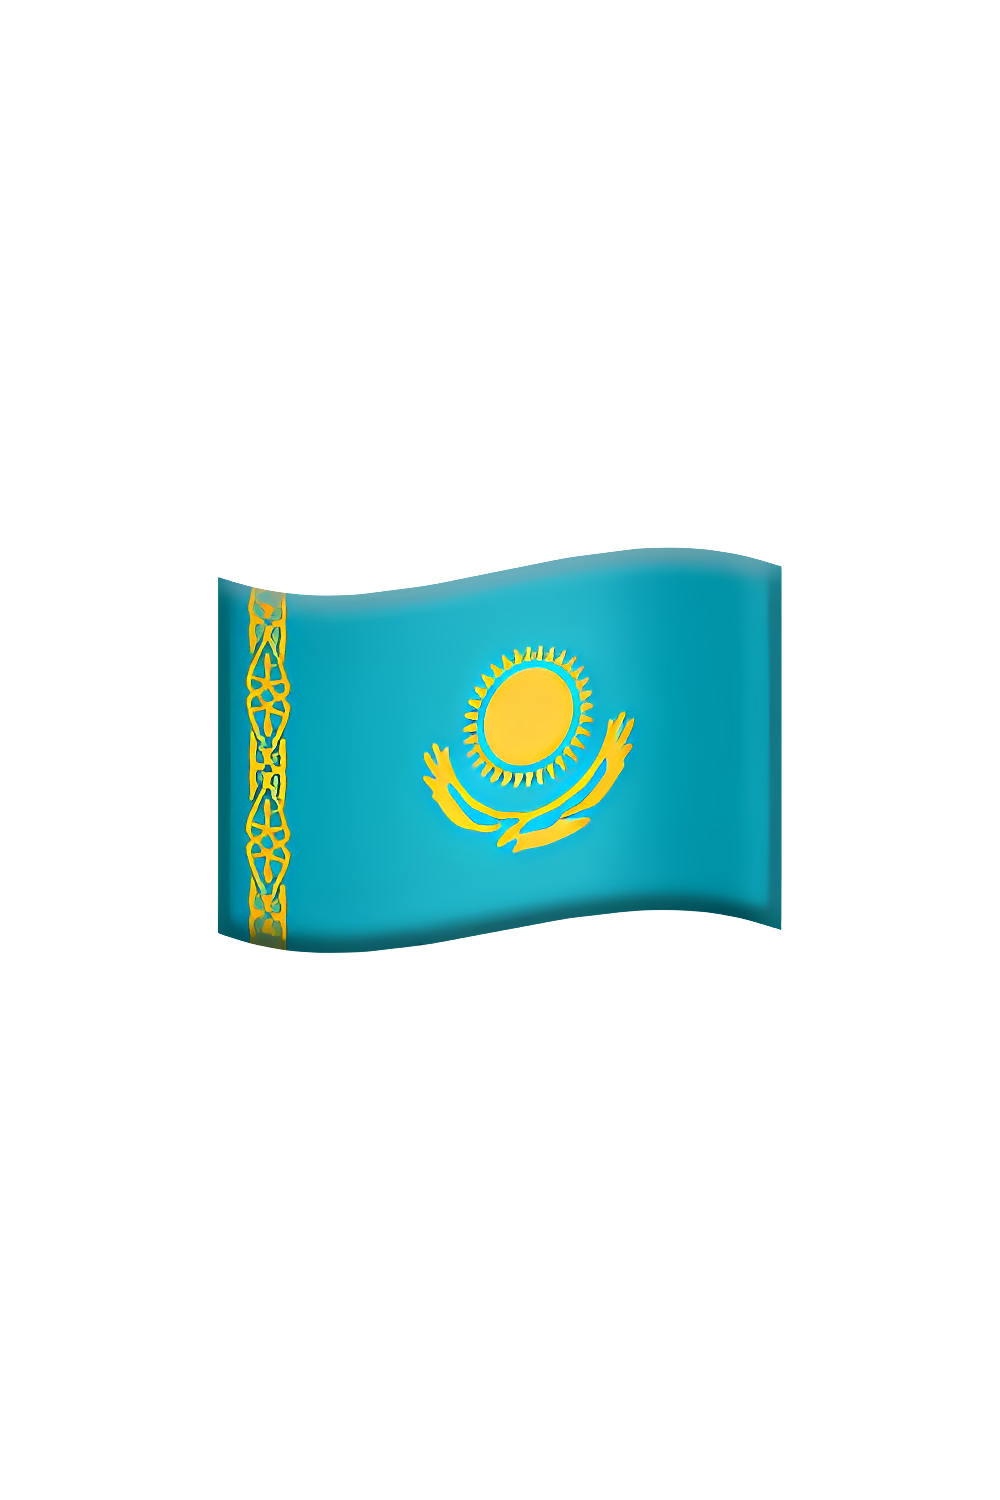 Explore the beautiful flag of kazakhstan